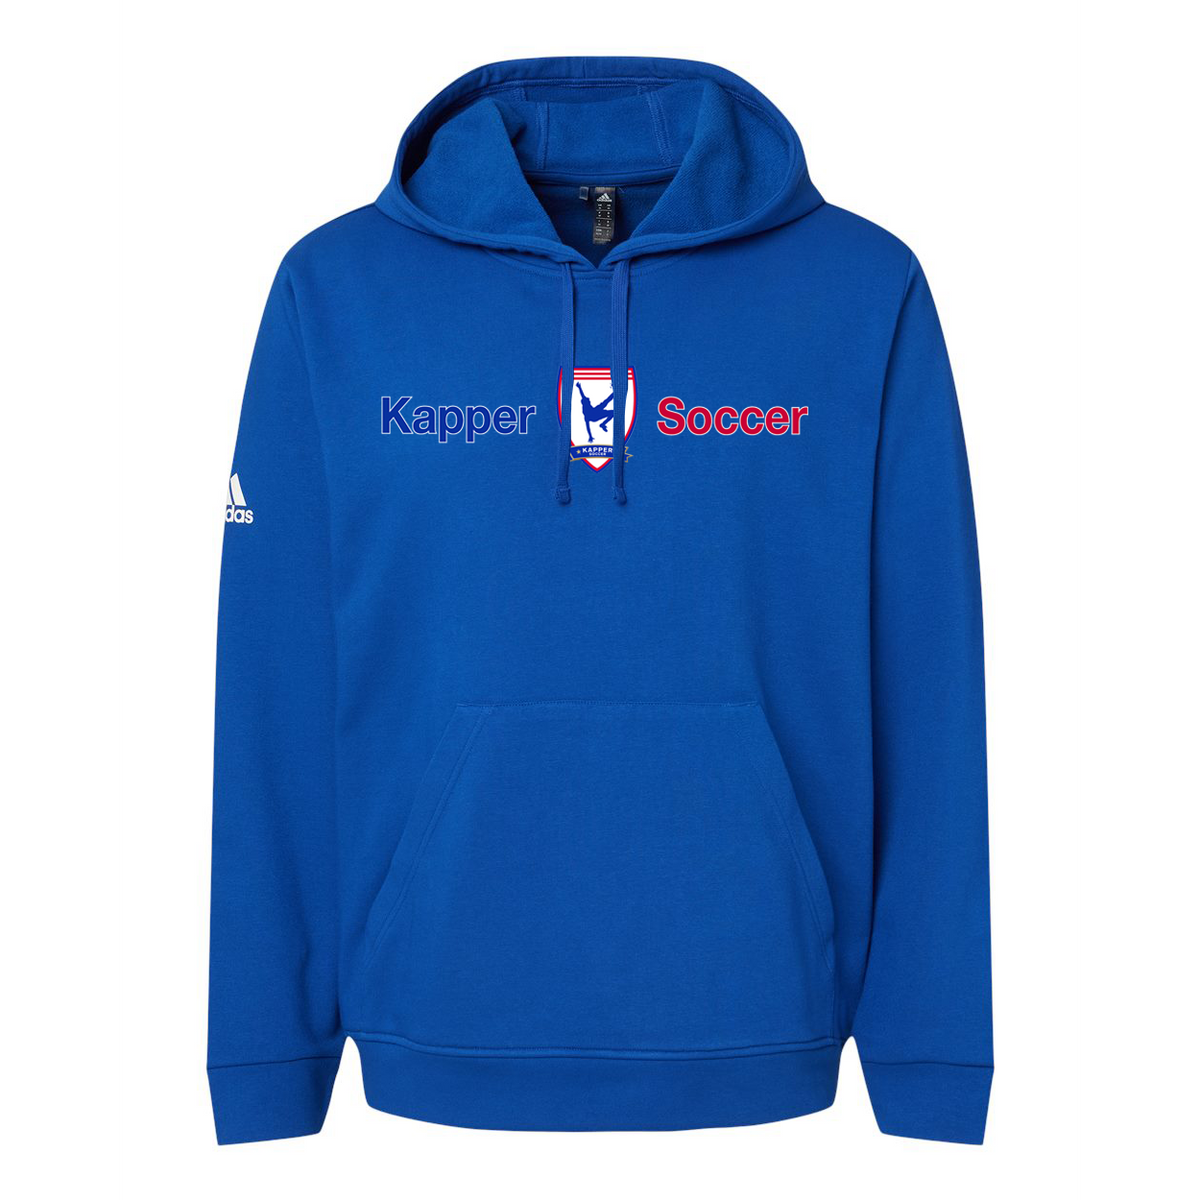 Kapper Soccer Adidas Fleece Hooded Sweatshirt